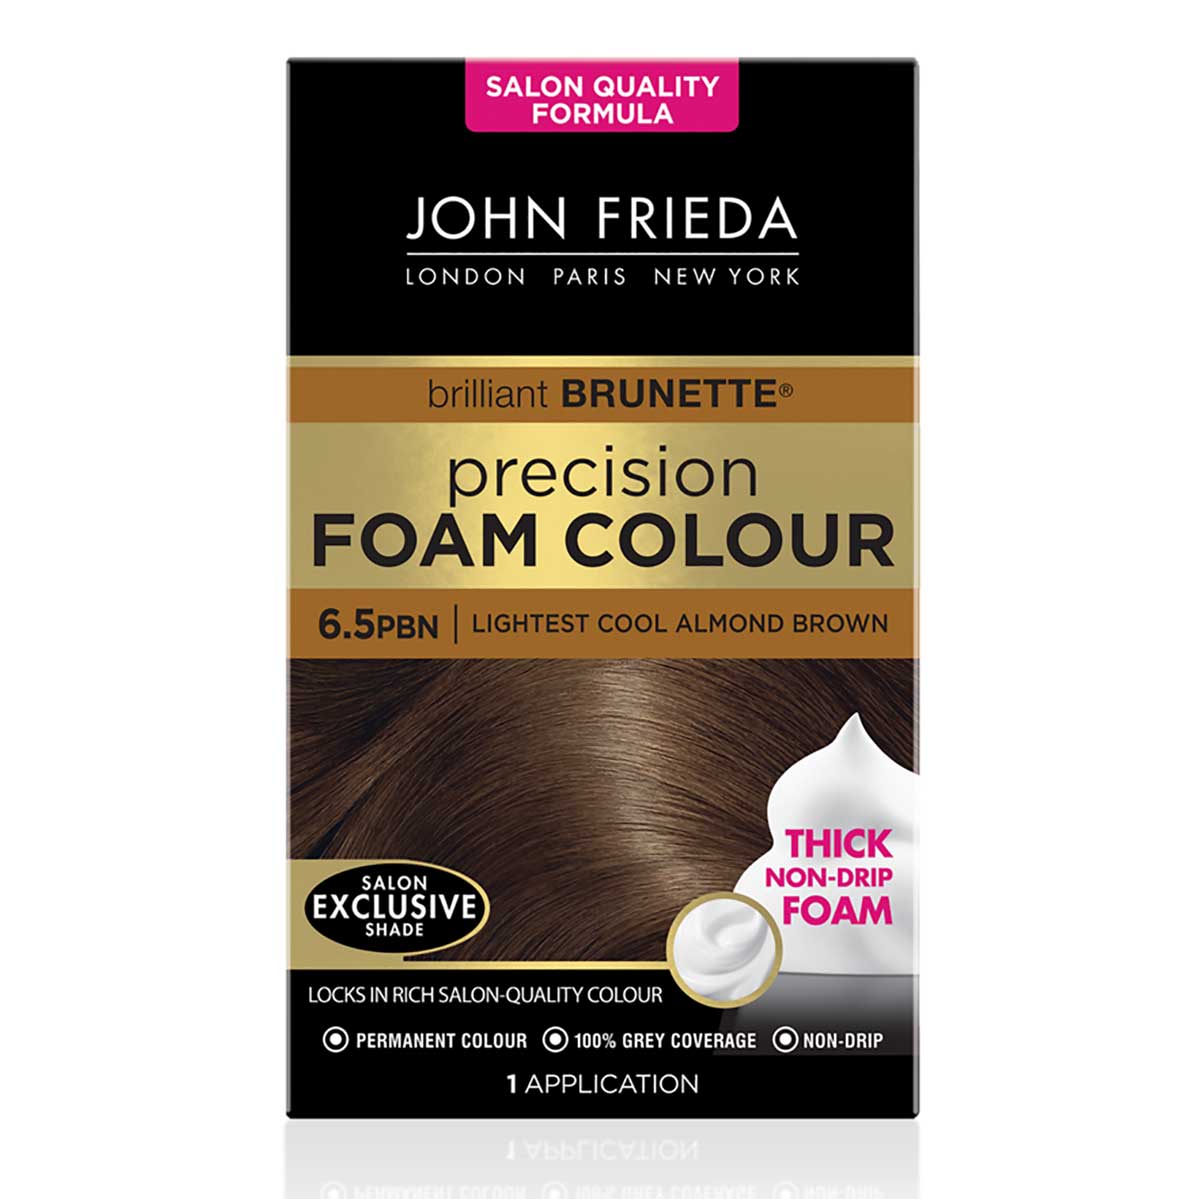 John Frieda Precision Foam Colour 6.5Pbn Lightest Cool Almond Brown